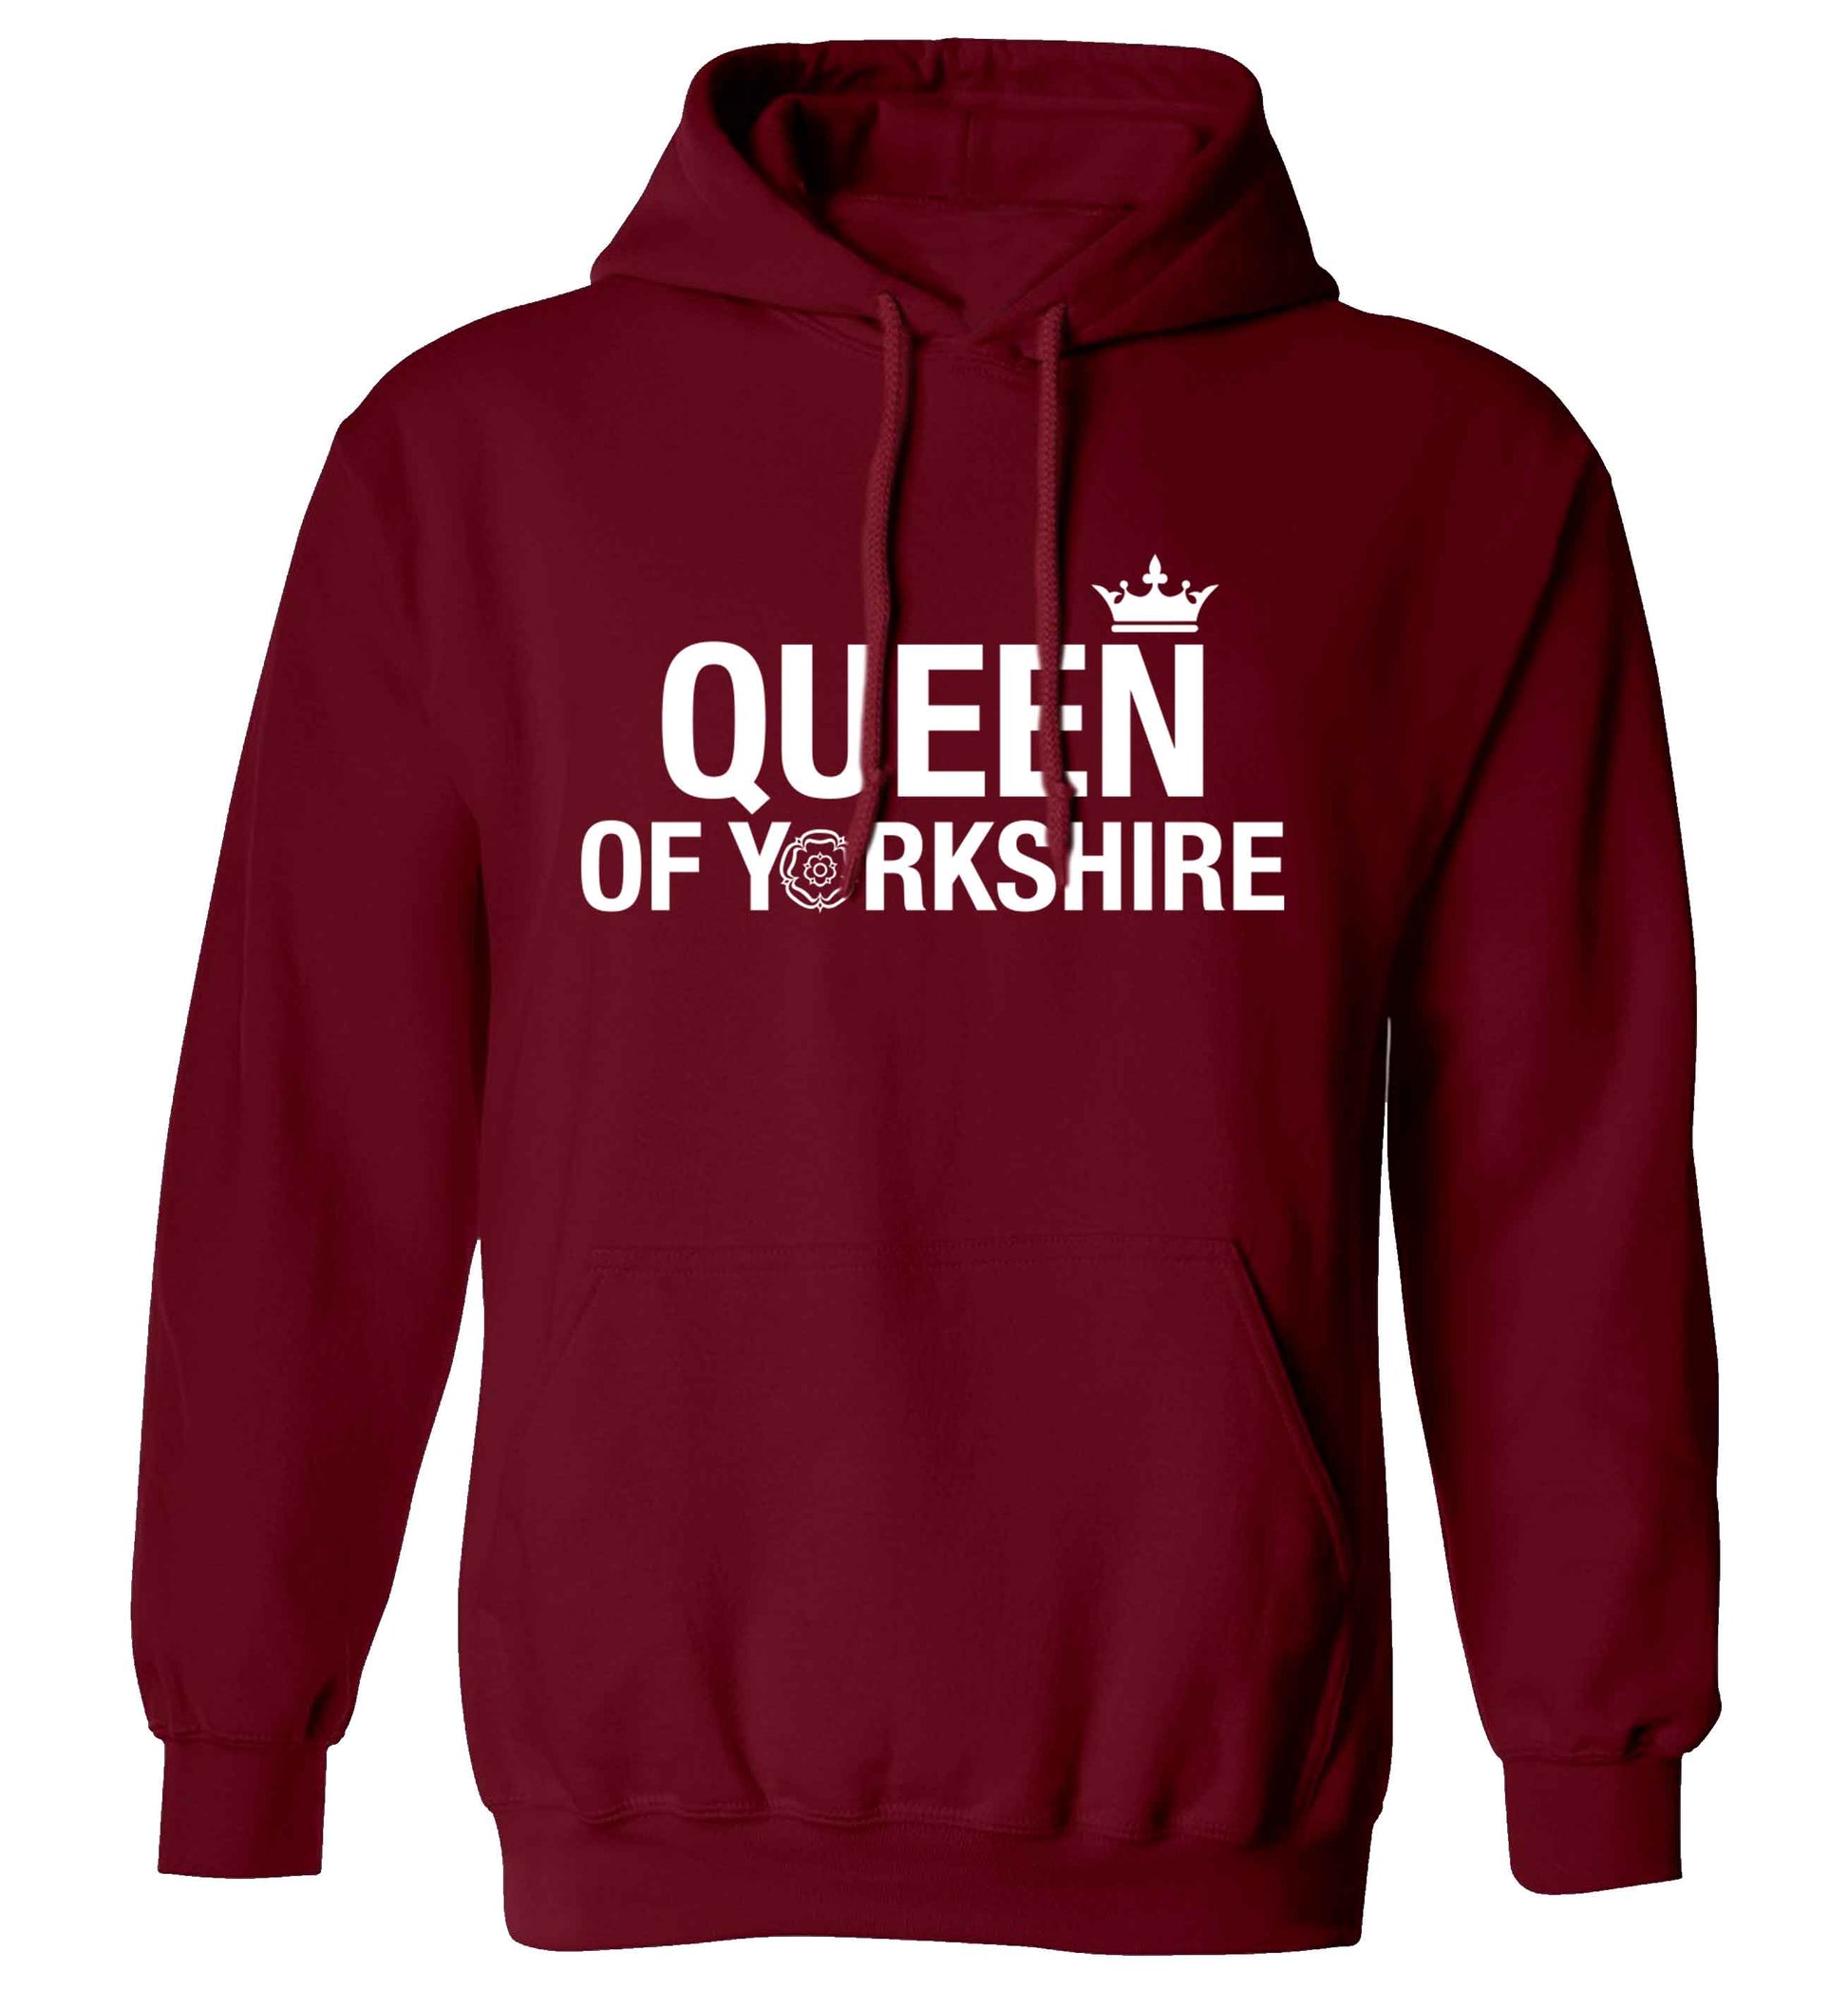 Queen of Yorkshire adults unisex maroon hoodie 2XL